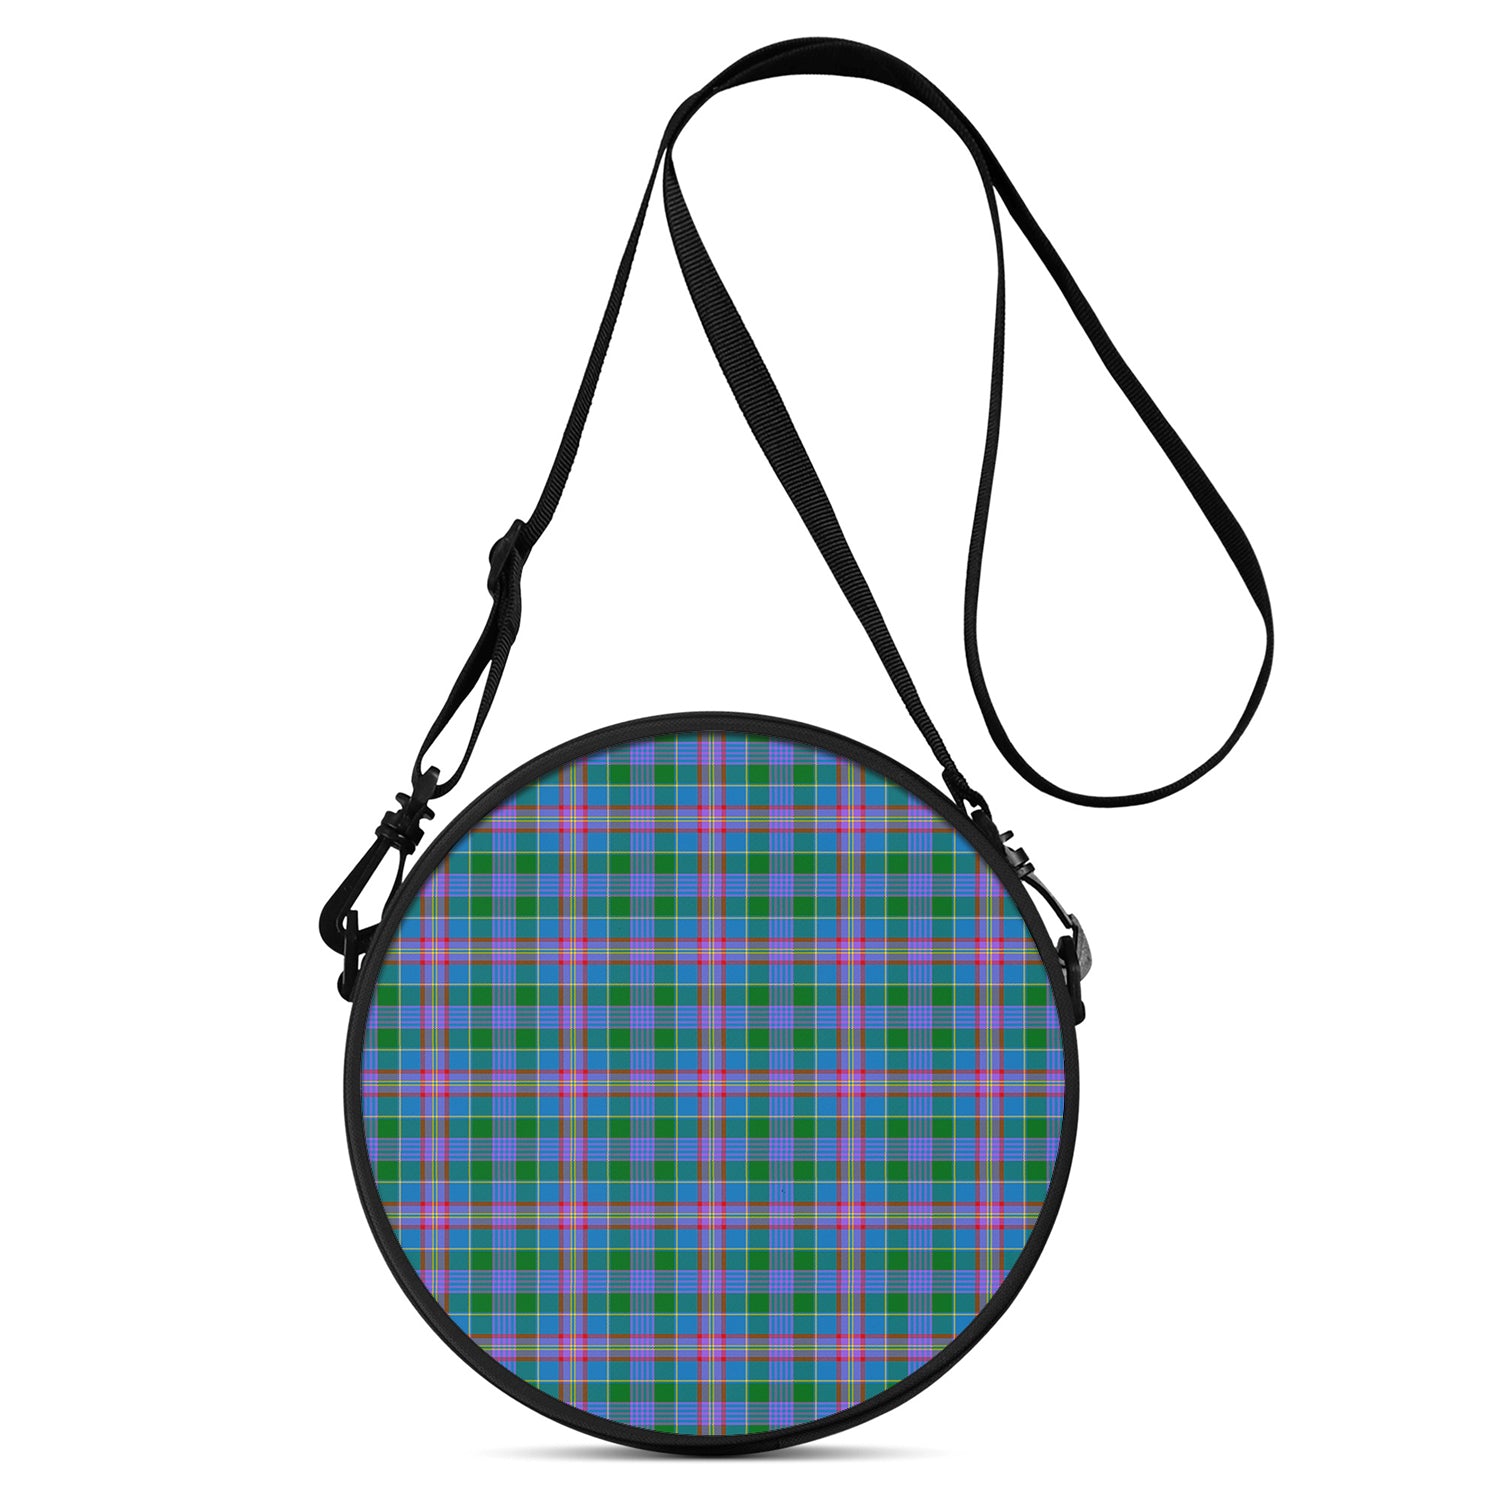 ralston-tartan-round-satchel-bags